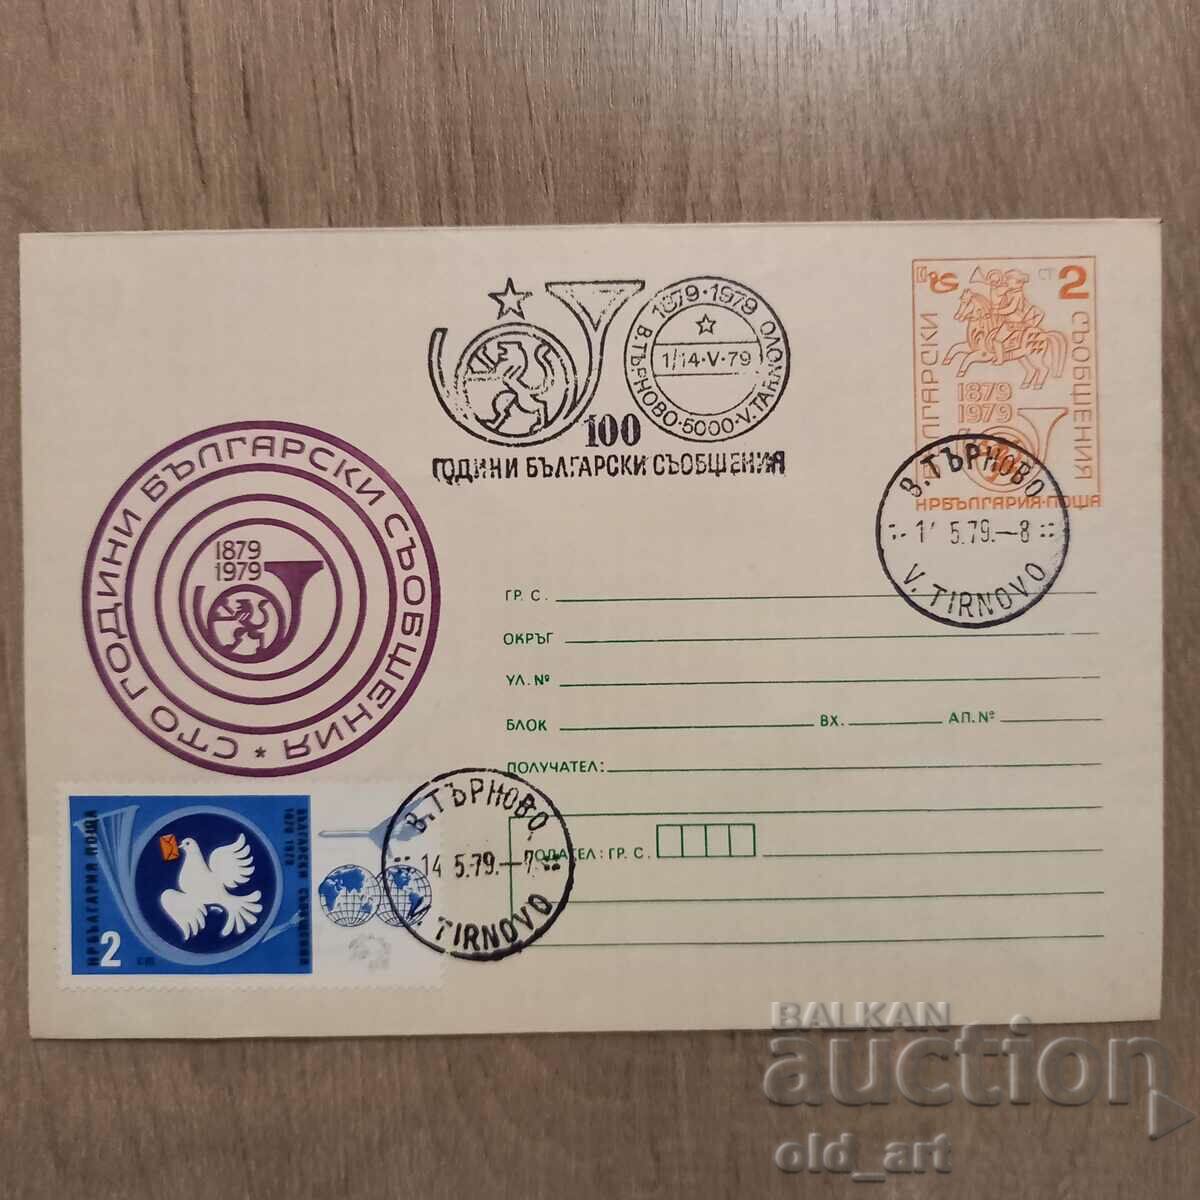 Postal envelope - 100 years of Bulgarian messages